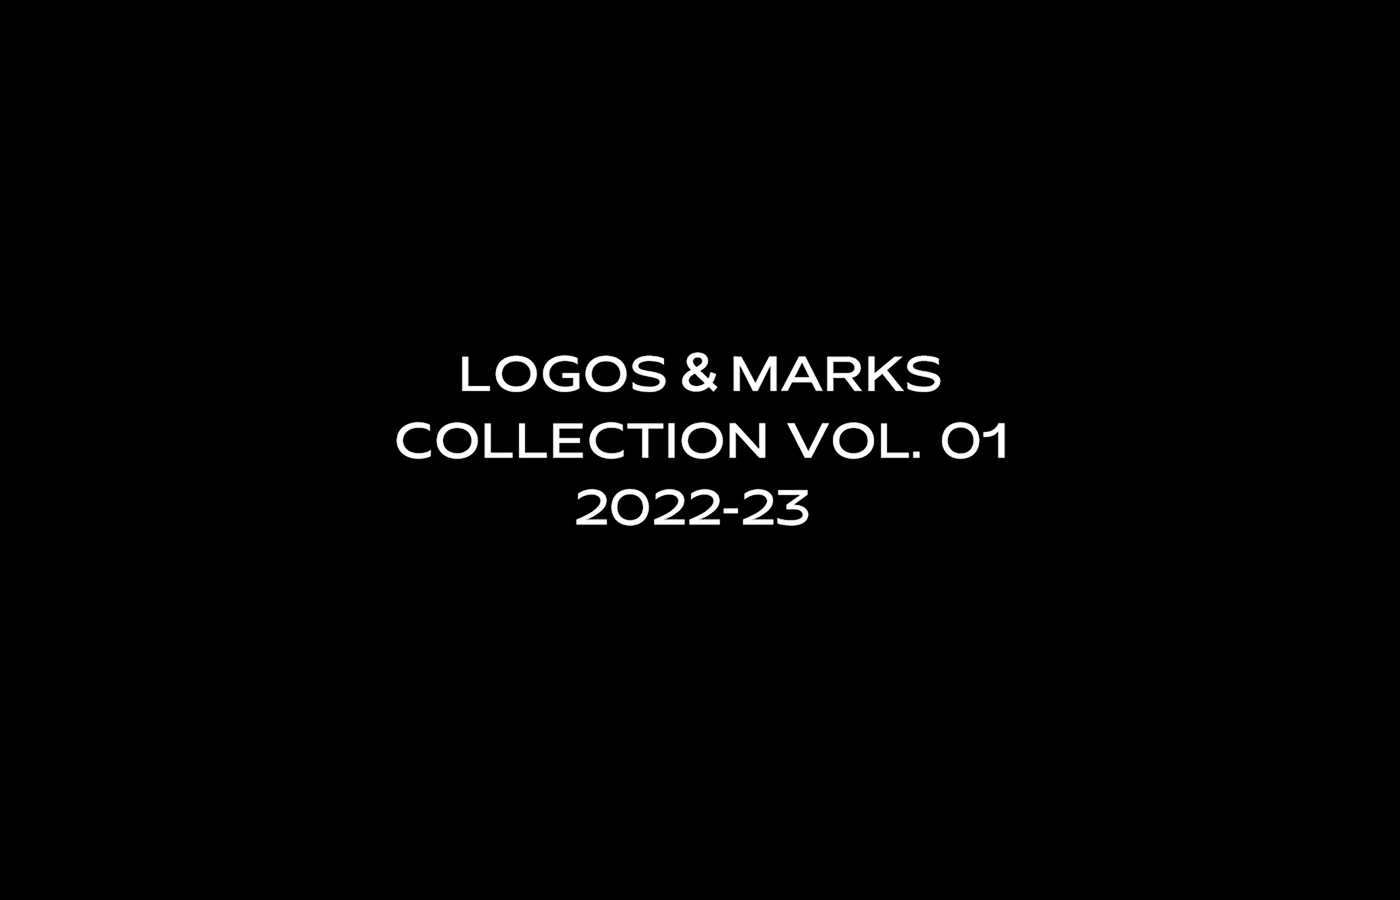 Logos & Marks collection